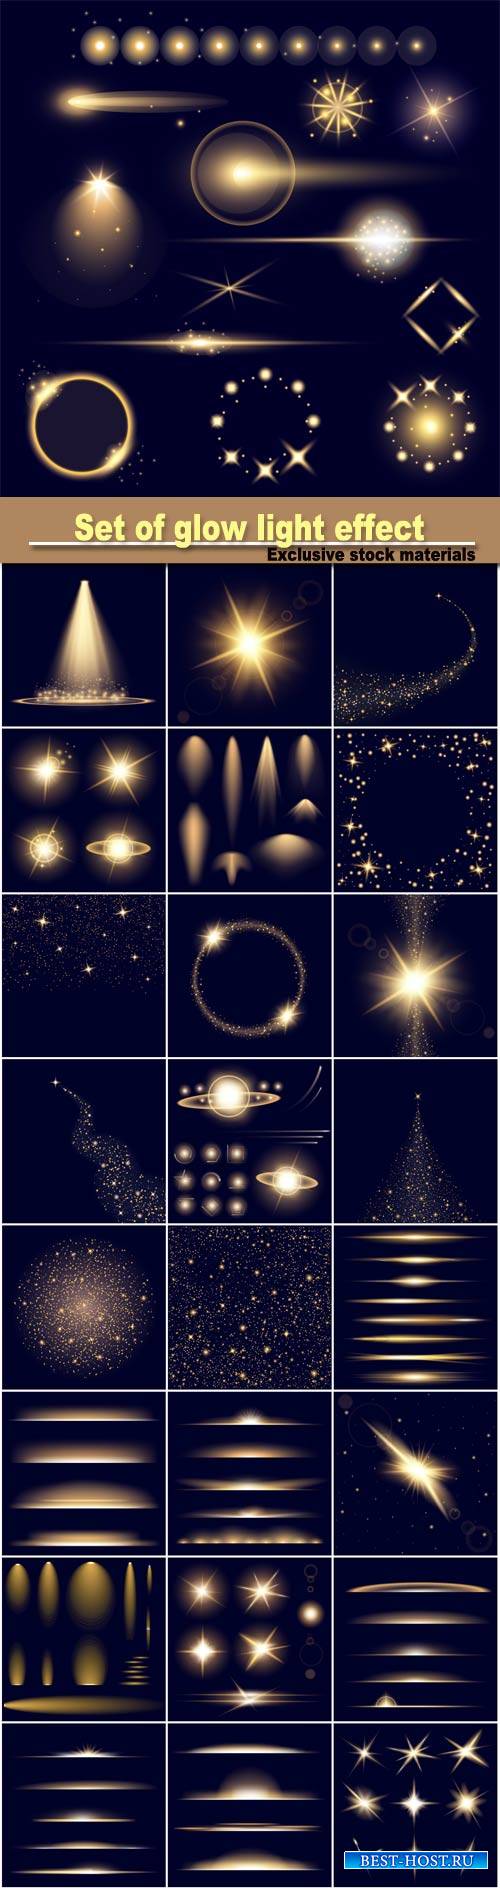 Vector set of glow light effect stars bursts with sparkles, for illustration template art design